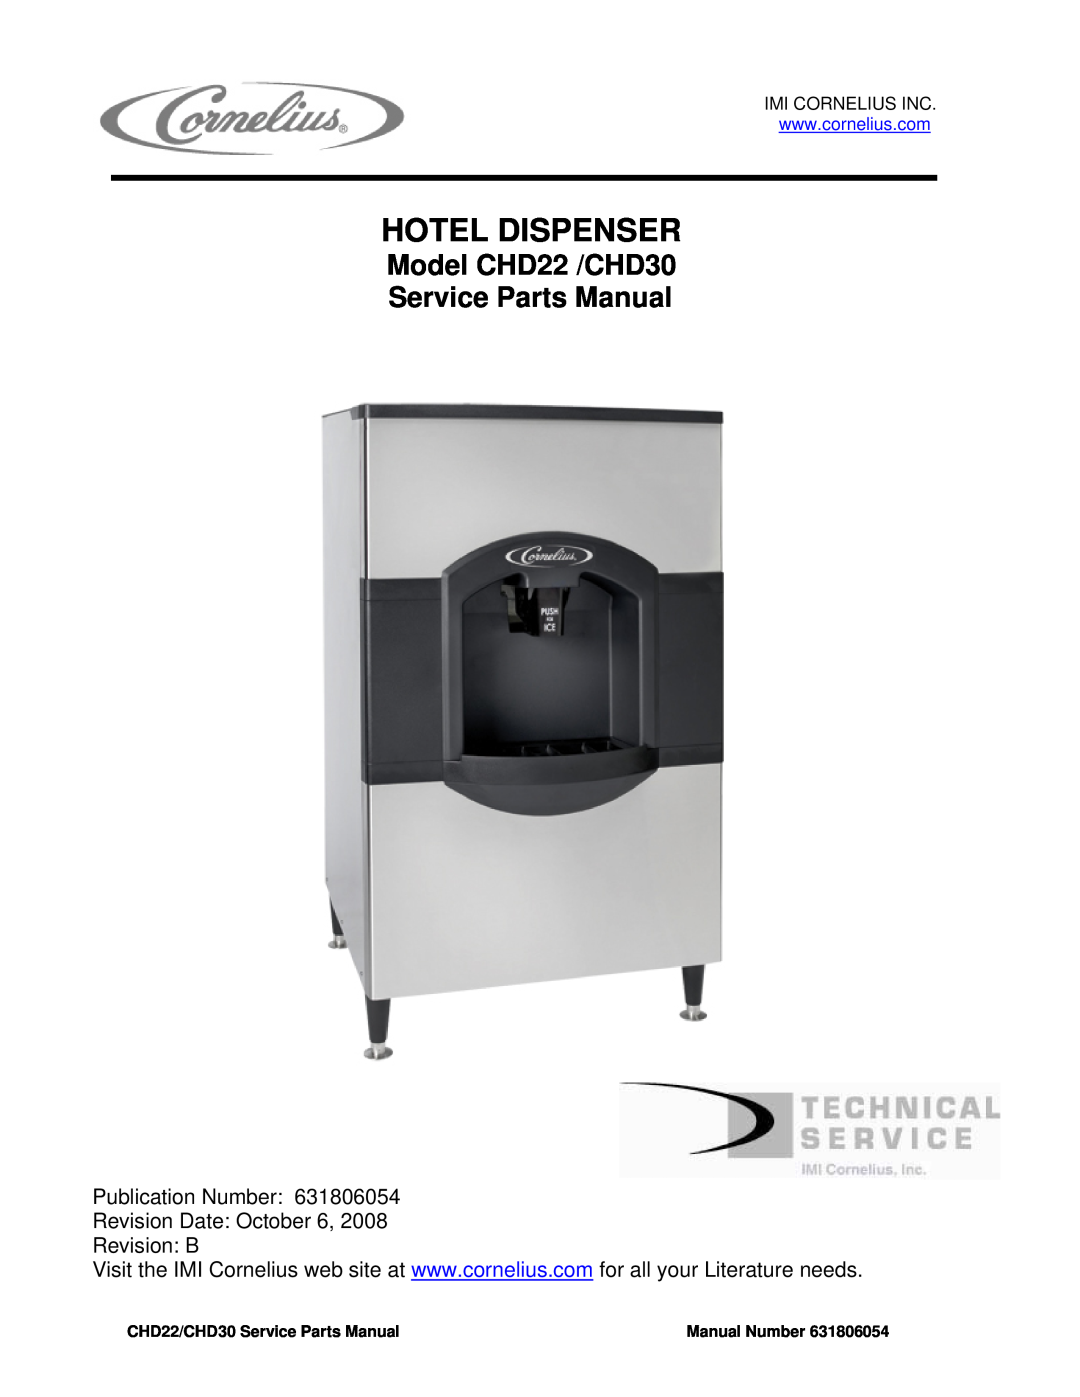 Cornelius manual Hotel Dispenser, Model CHD22 /CHD30 Service Parts Manual, Publication Number Revision Date November 